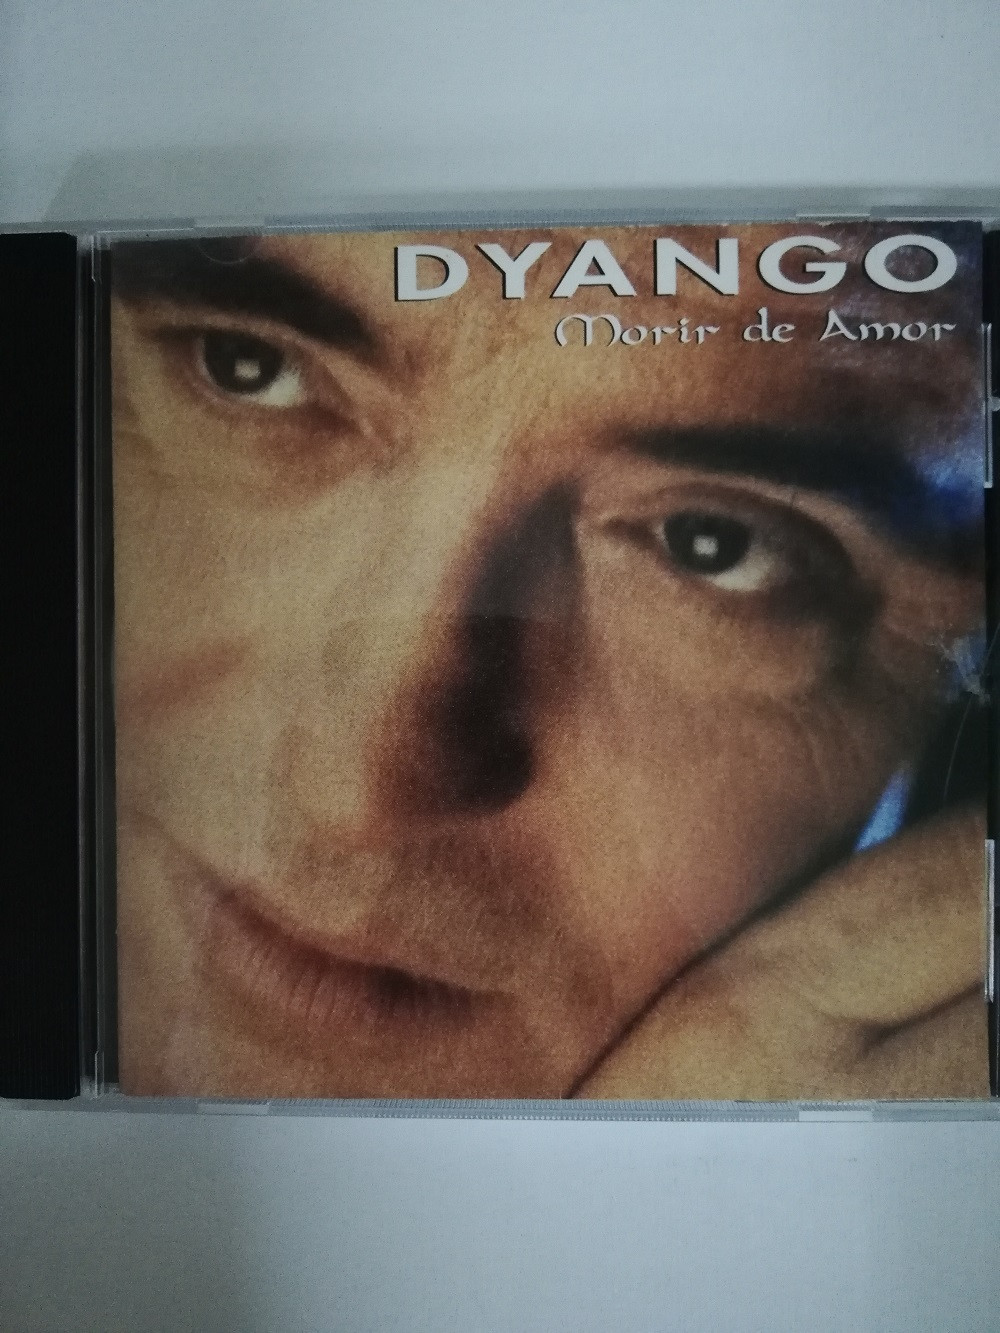 Imagen CD DYANGO - MORIR DE AMOR